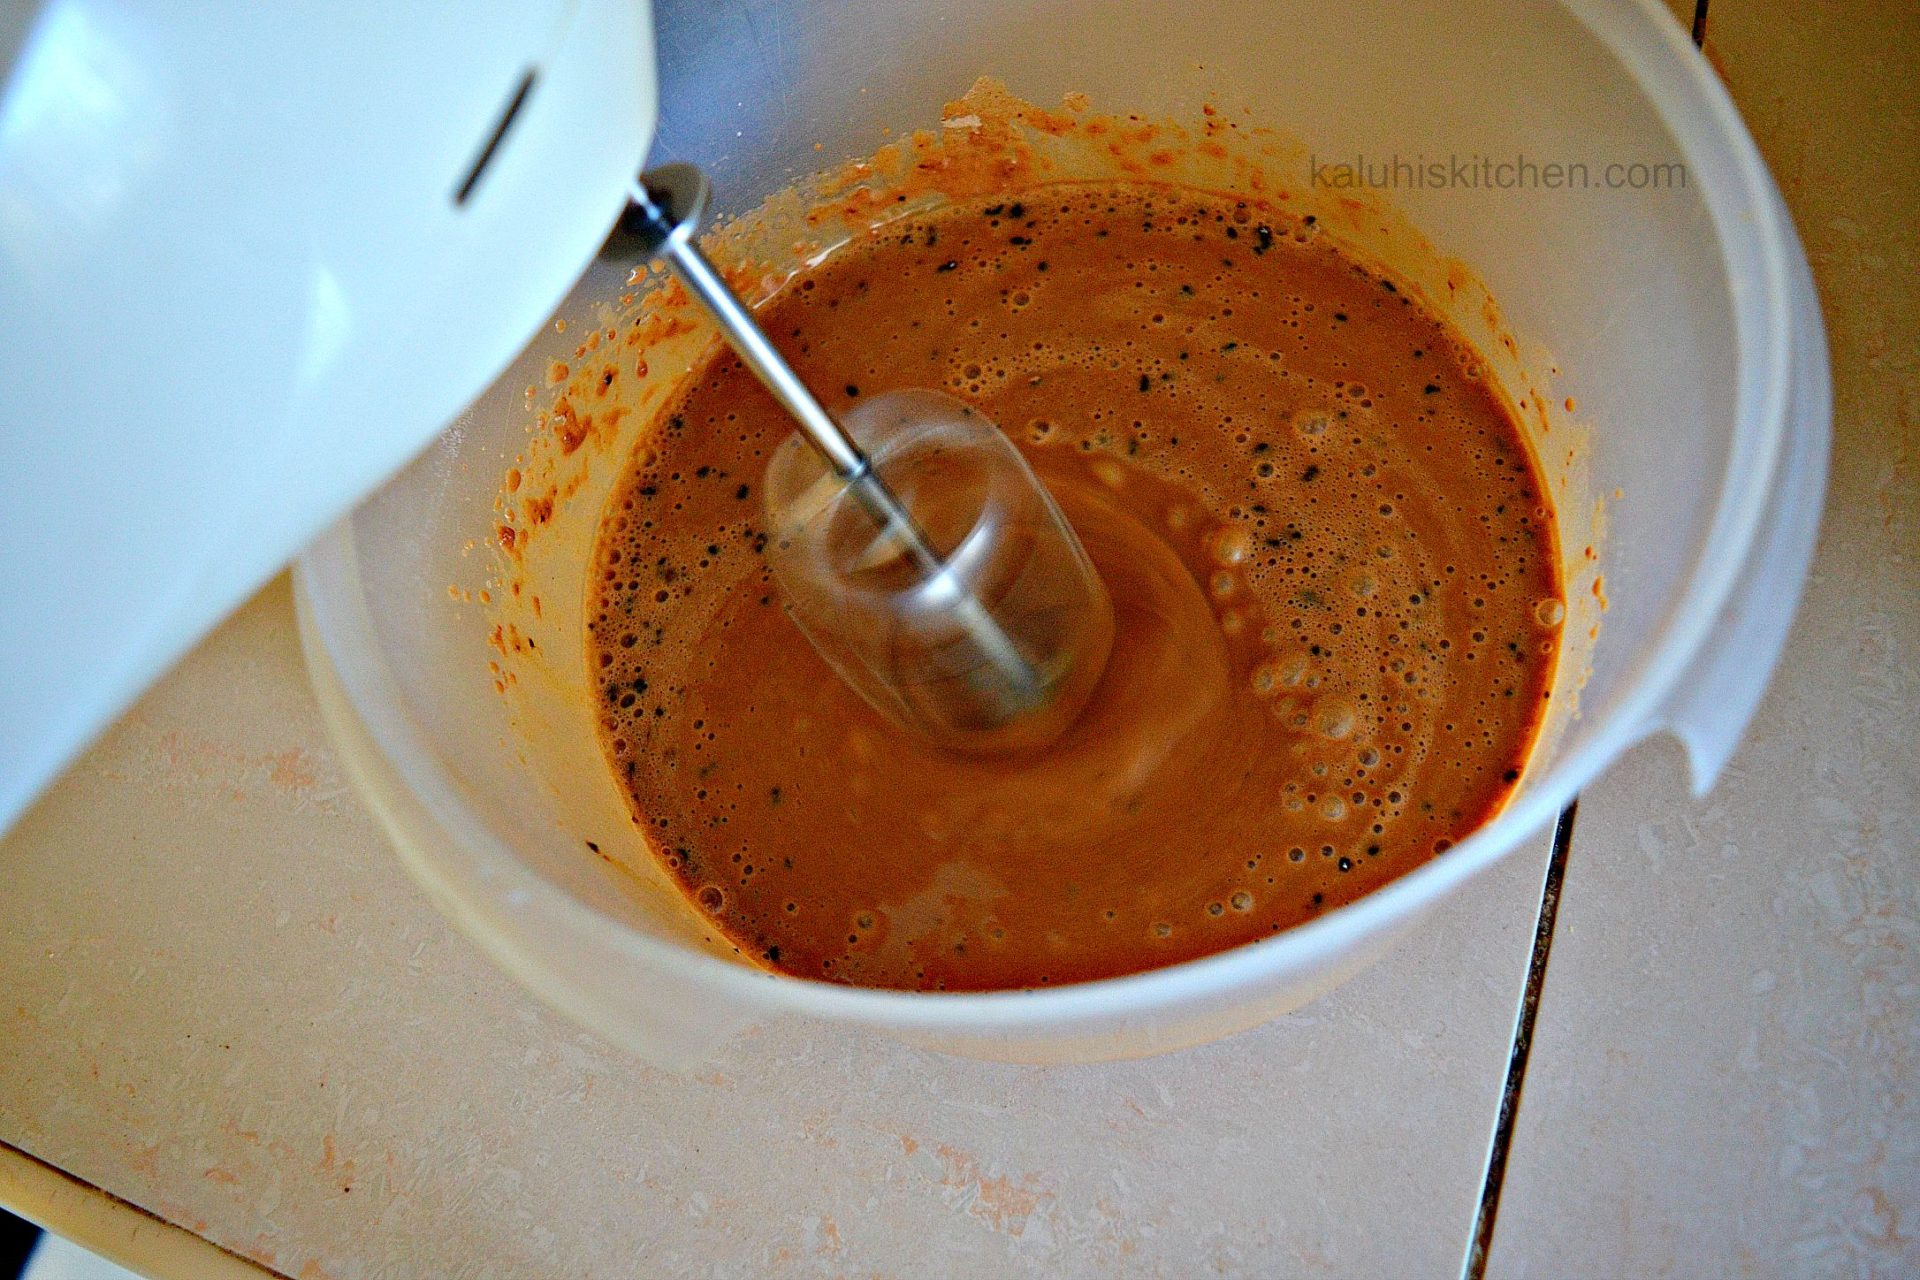 how to make coffee crepes_kaluhiskitchen.com_best crepe recipes_best kenyan food blogger